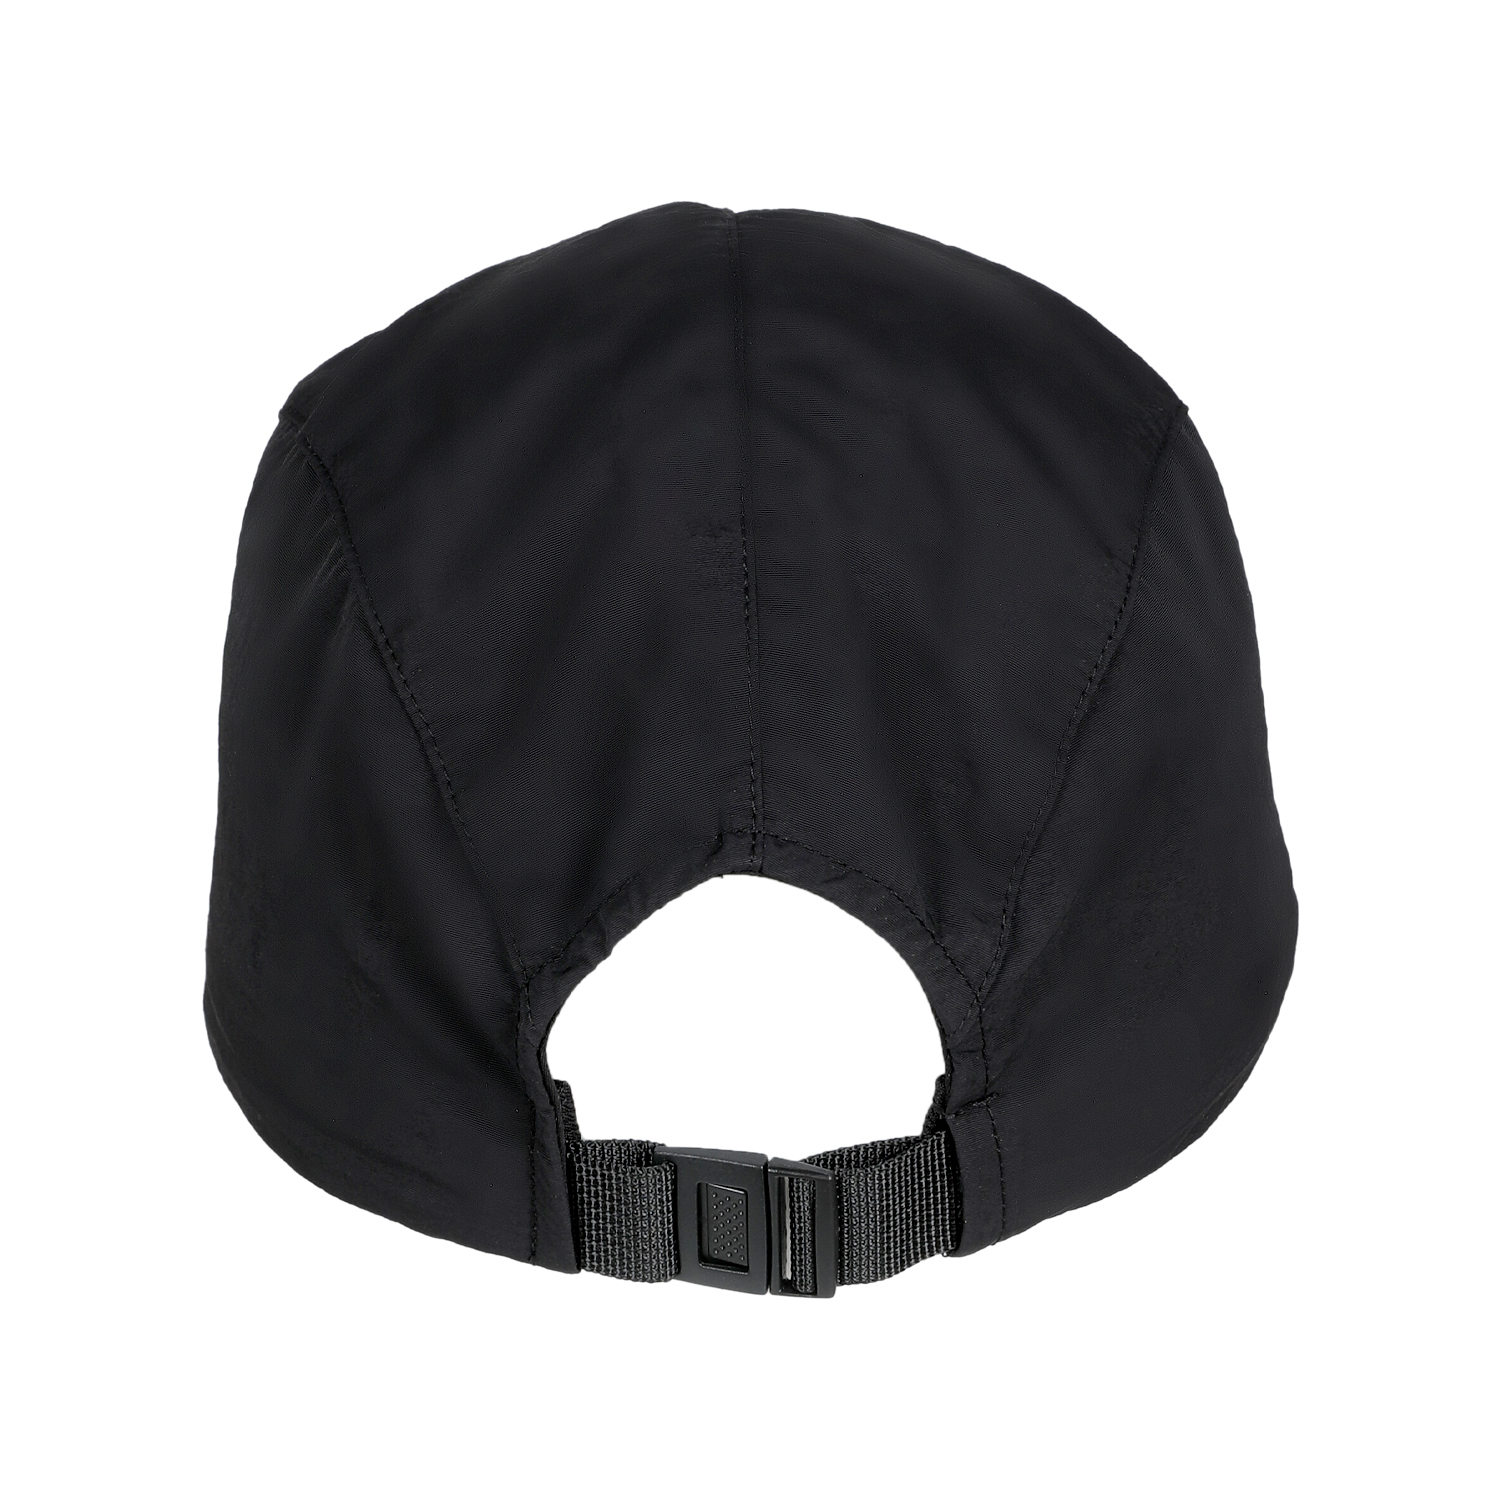 Кепка Toread Quick drying folding cap Black